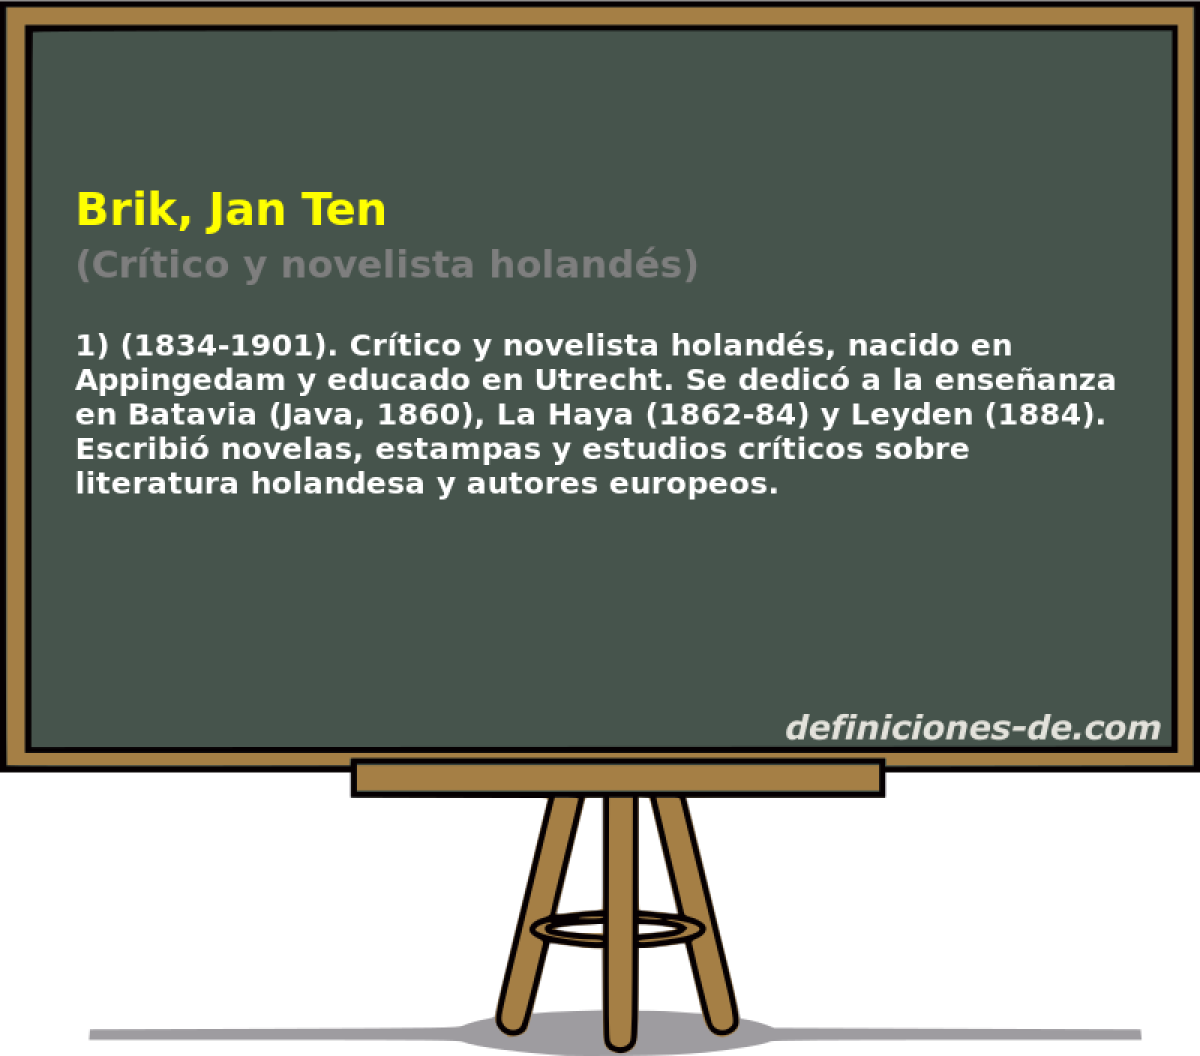 Brik, Jan Ten (Crtico y novelista holands)